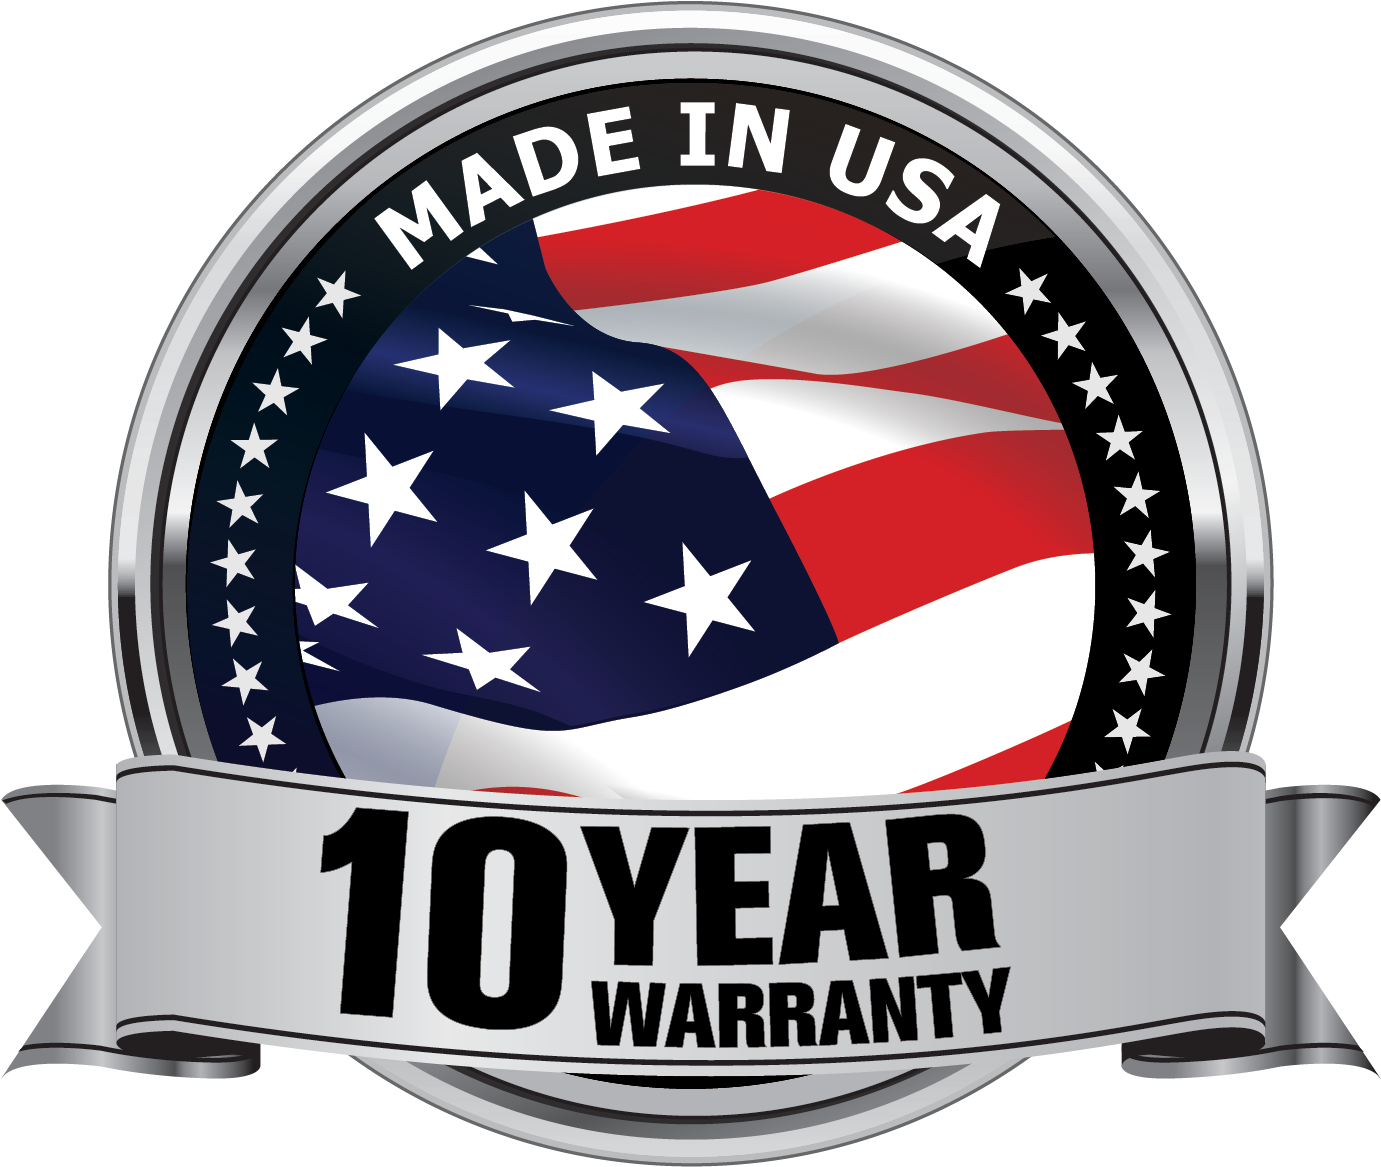 Made in USA, 10 Year Warranty